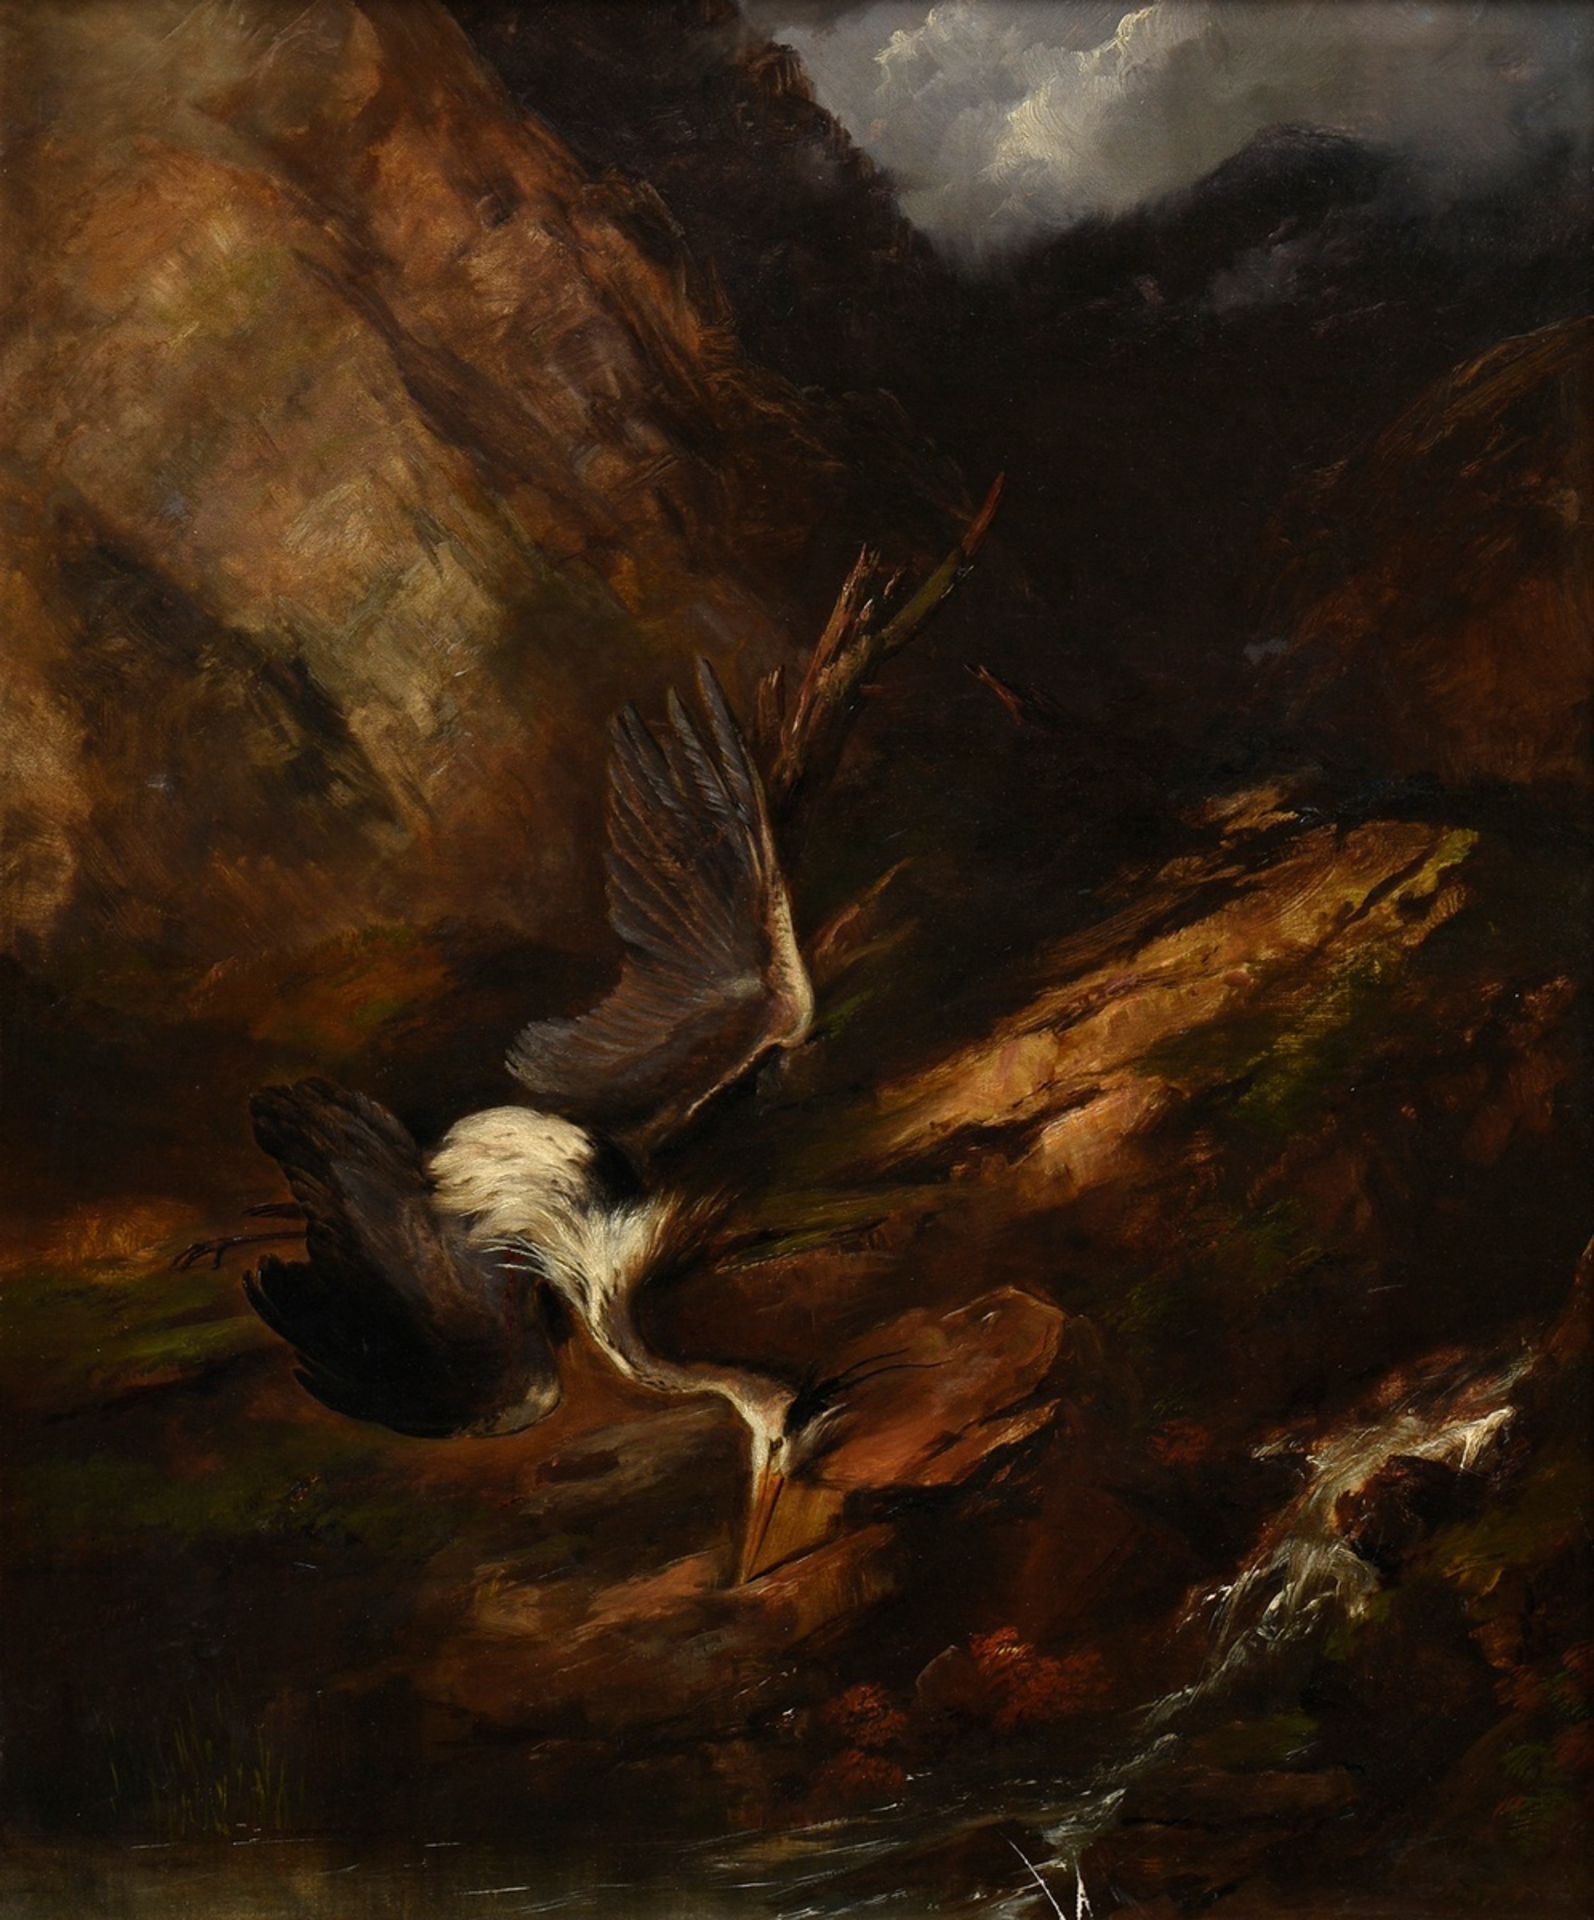 Train, Edward (1801-1866) "Dead Grey Heron in Mountain Landscape" 1855, oil/canvas mounted, b.l. si